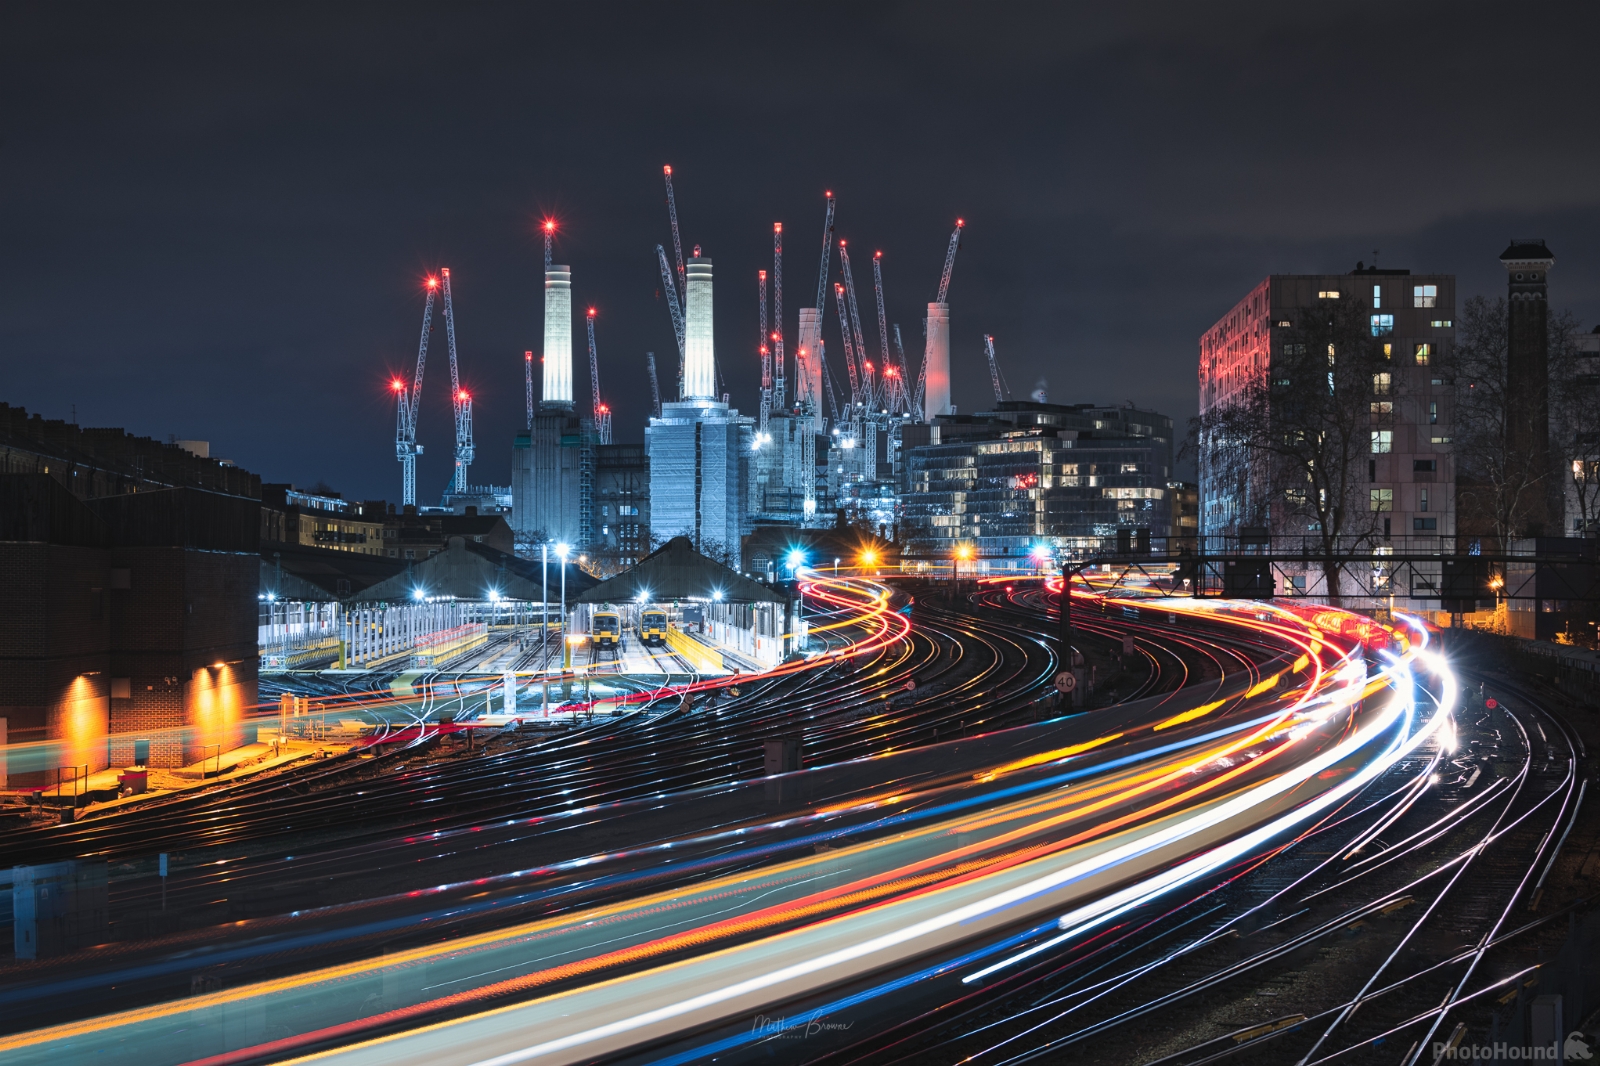 Image of Battersea Power Station from Ebury Bridge by Mathew Browne